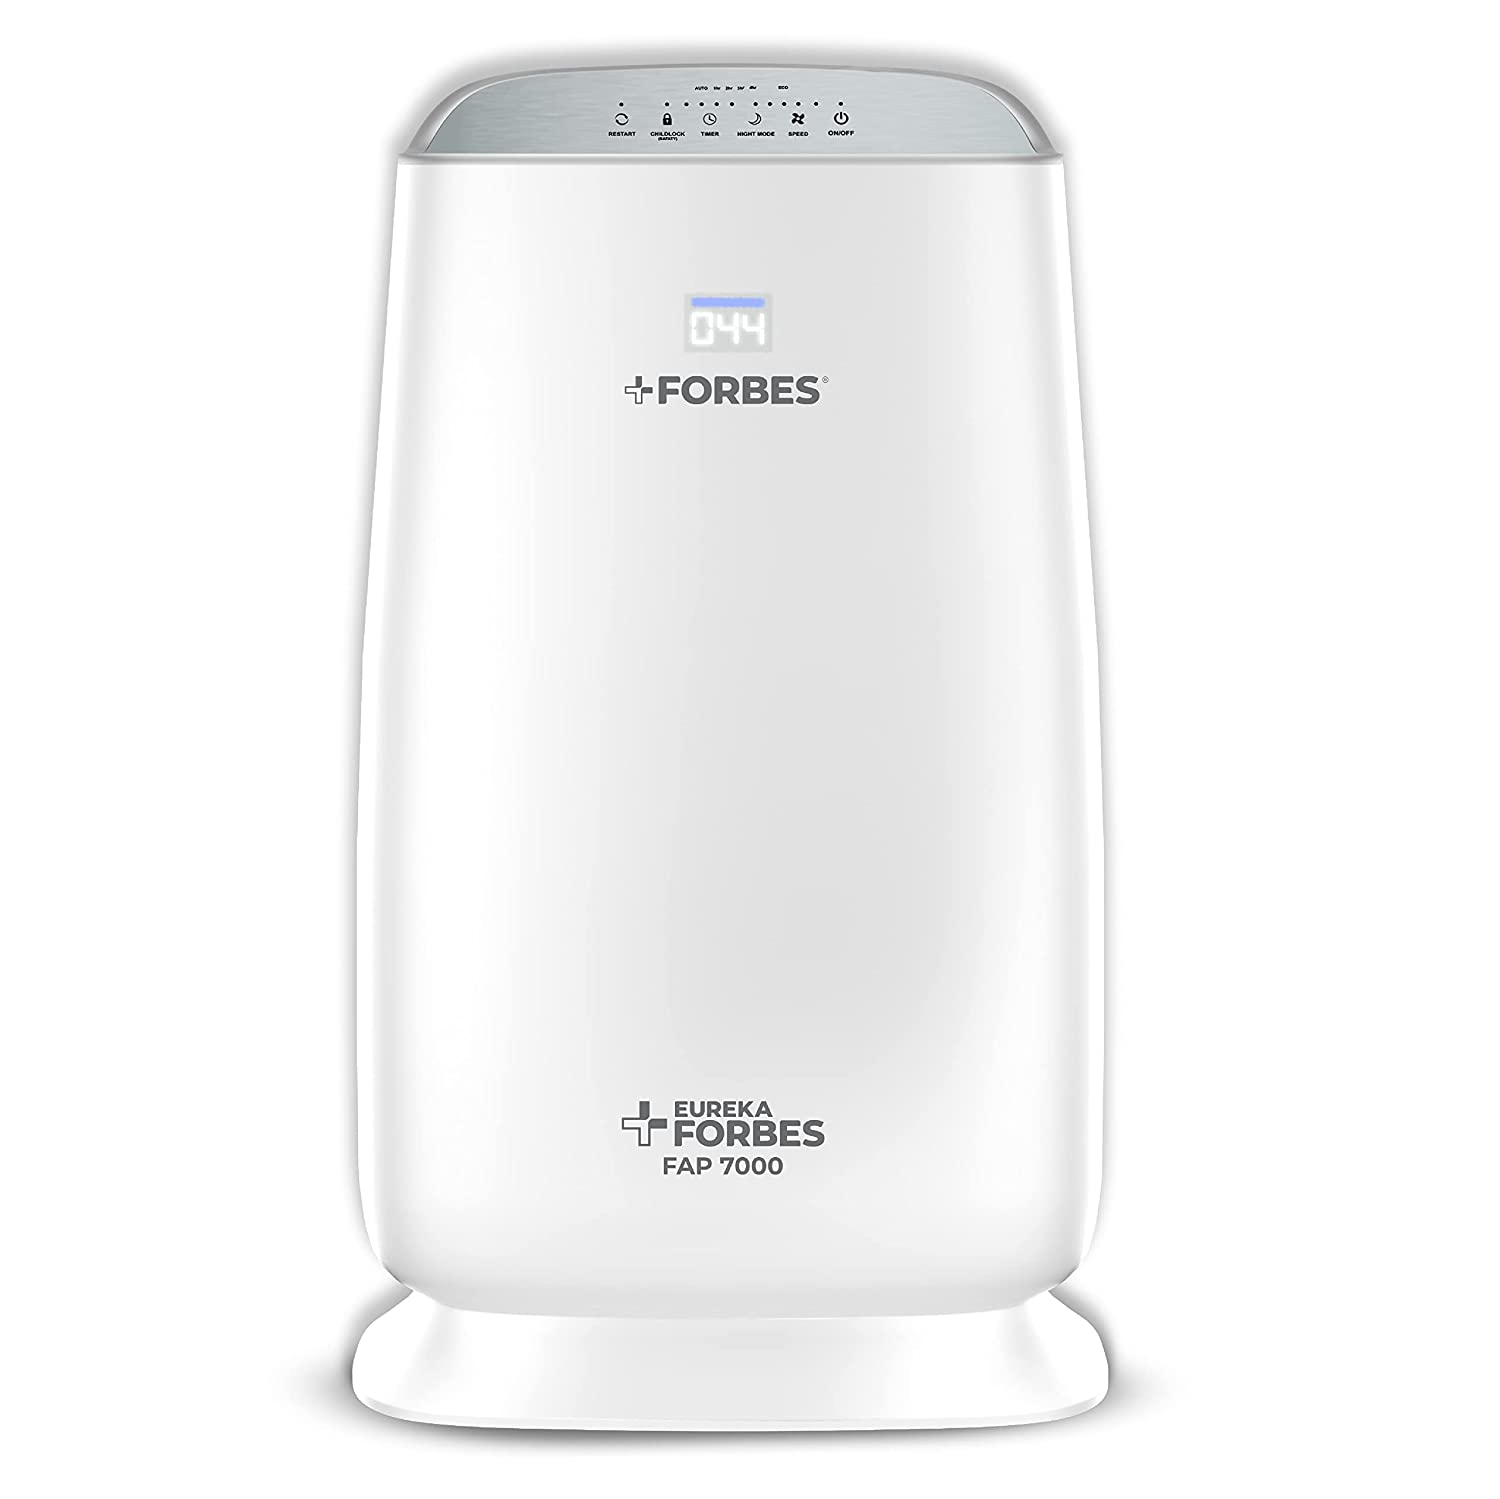 Buy Eureka Forbes Air Purifier FAP 7000|Eliminate 99.95% Bacteria & Viruses|HEPA Filter|Controls Foul Smell (White)